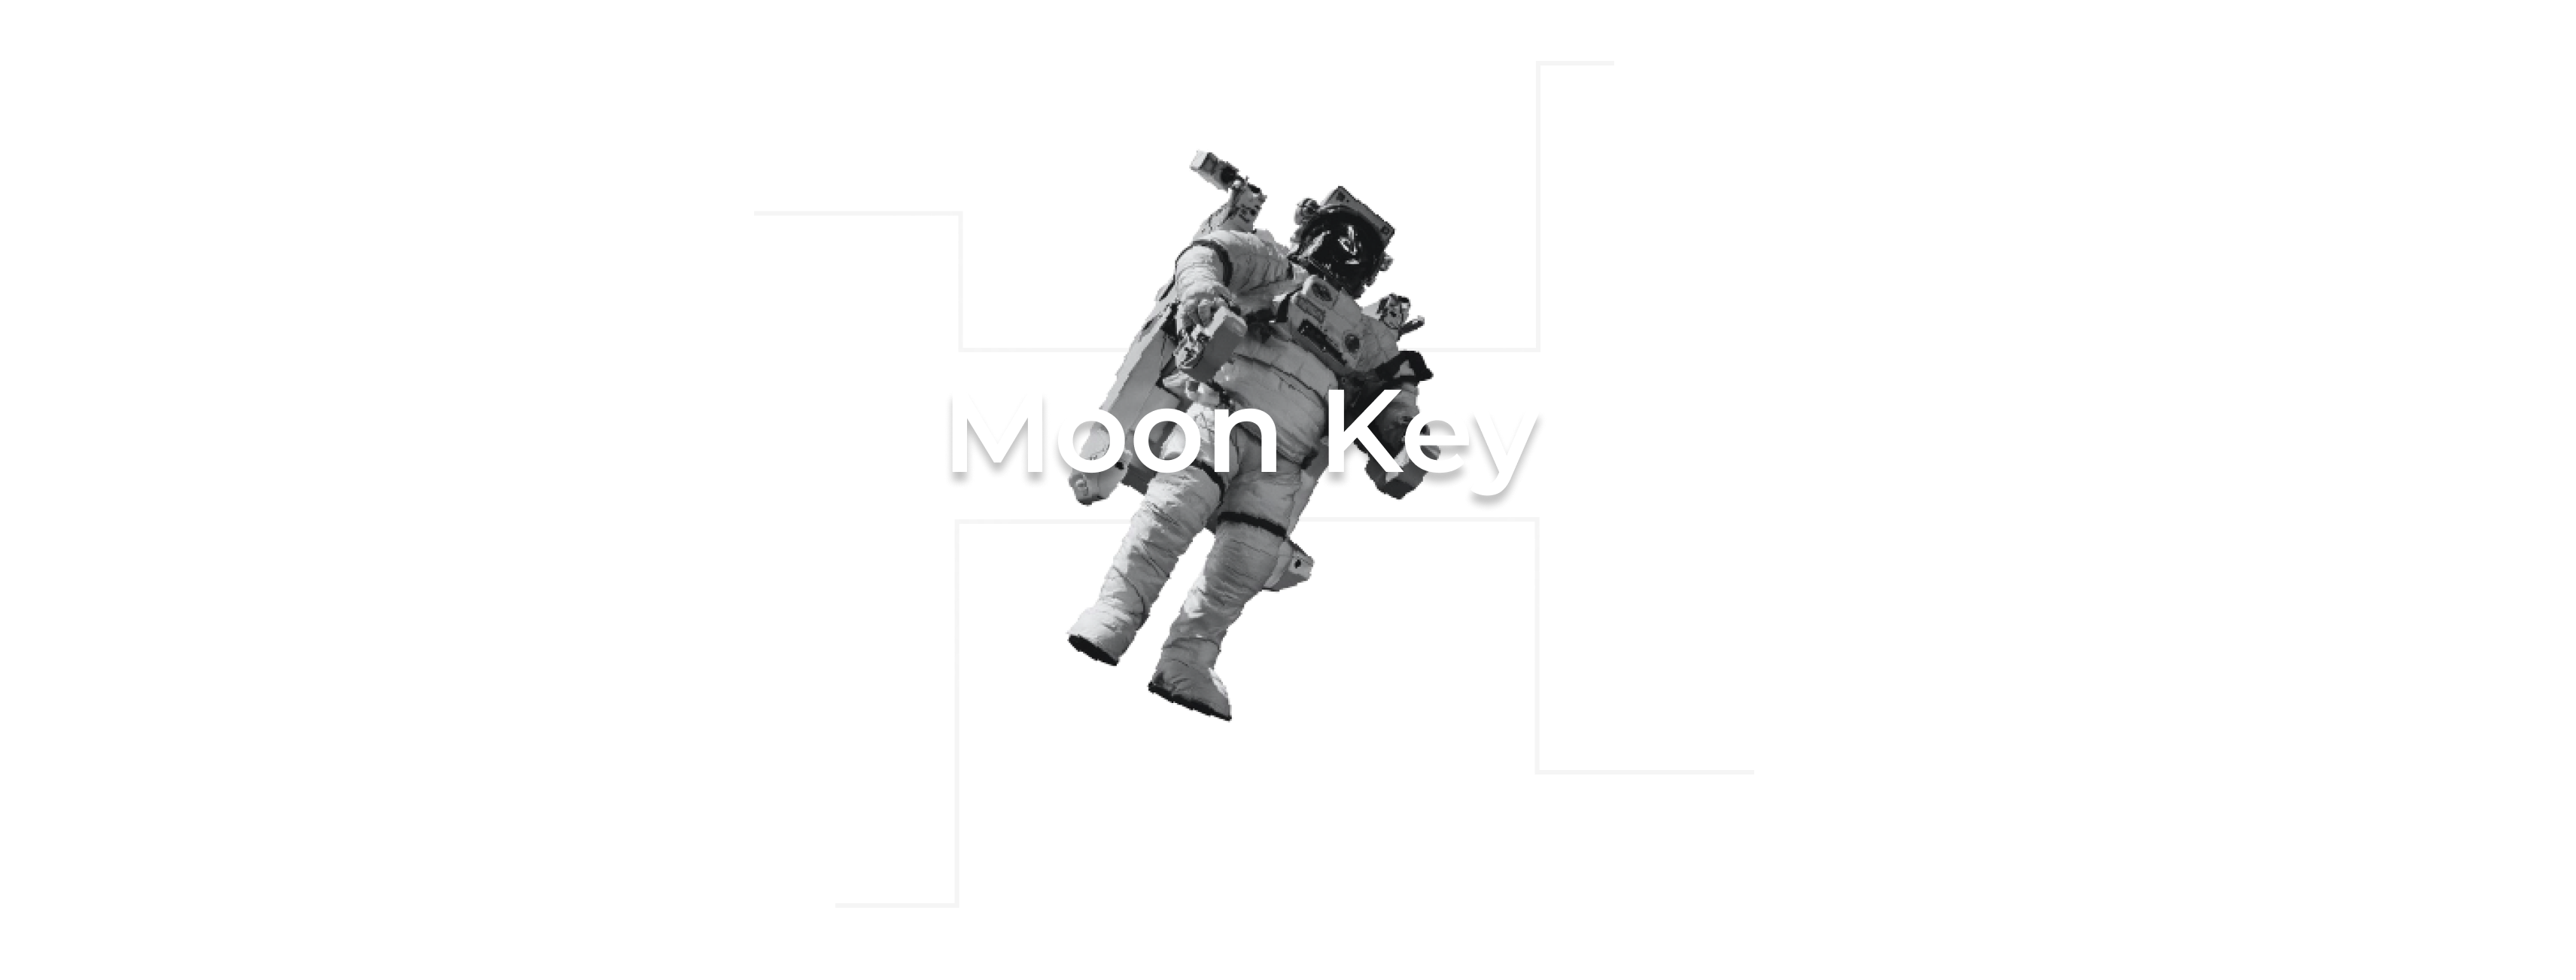 moonkey-banner